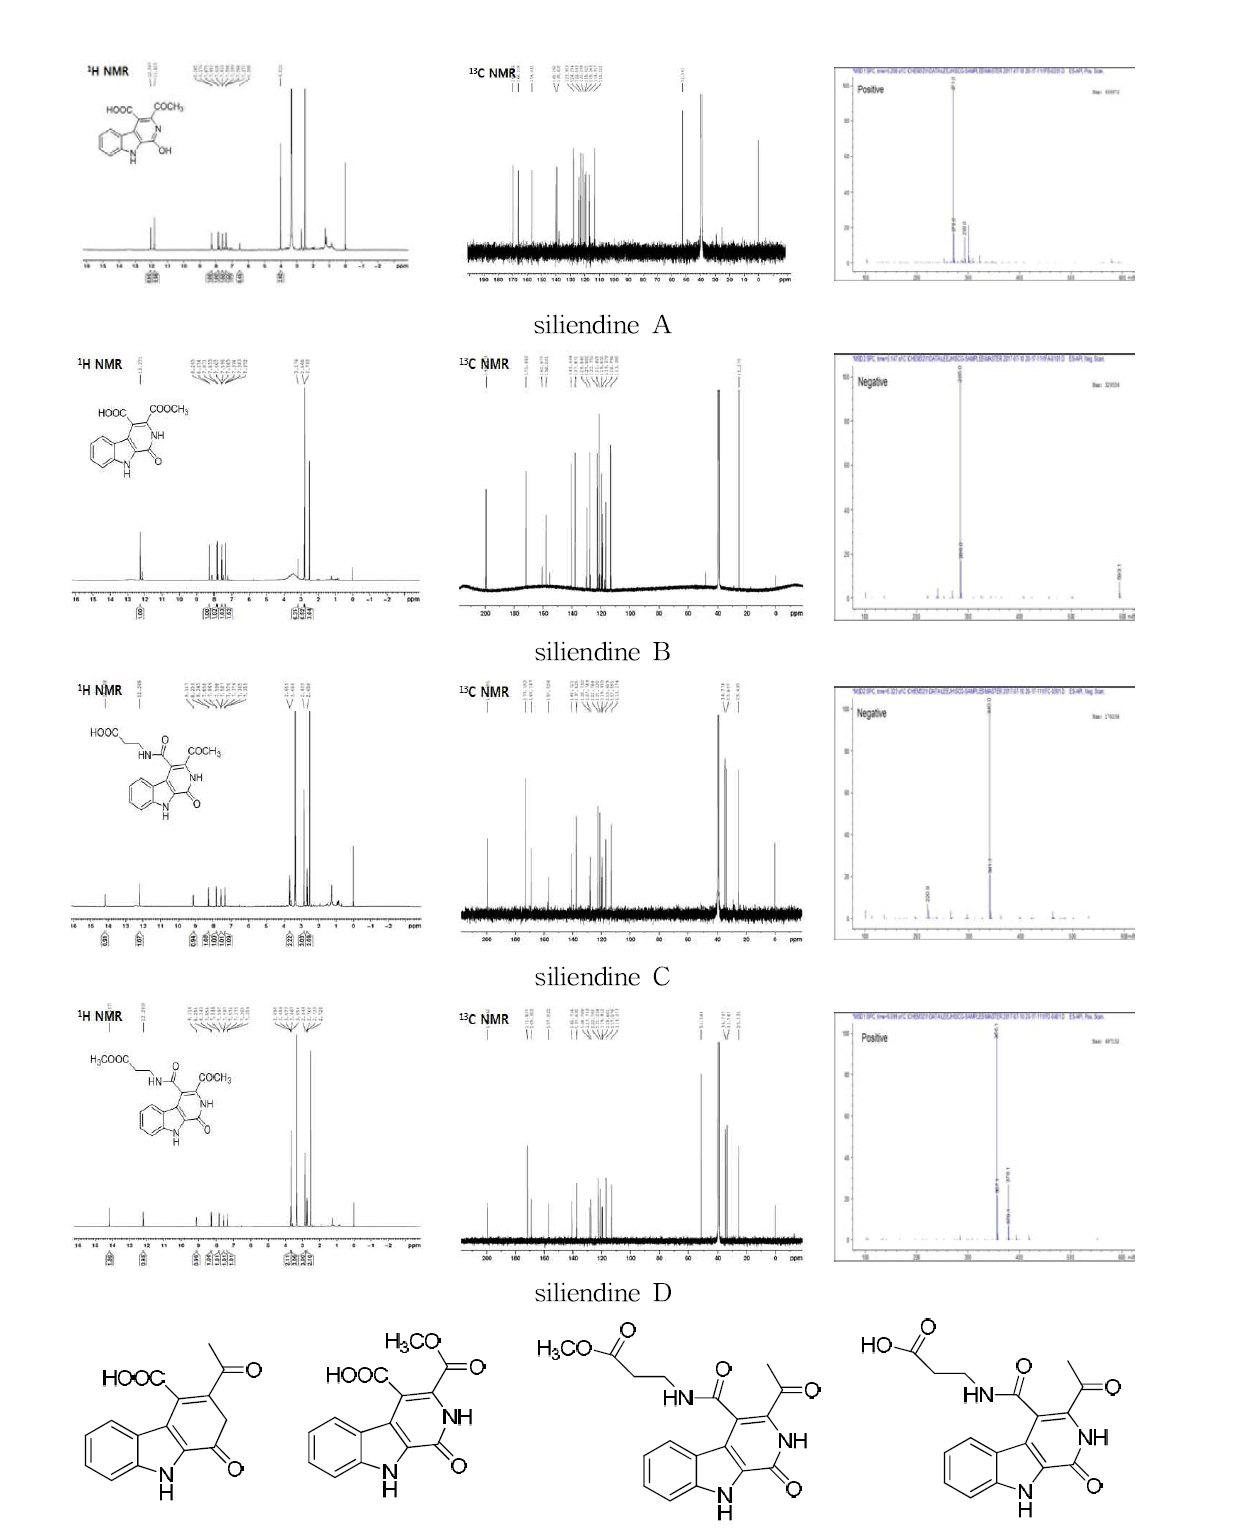 siliendine A ∼ D 의 NMR spectra 및 구조